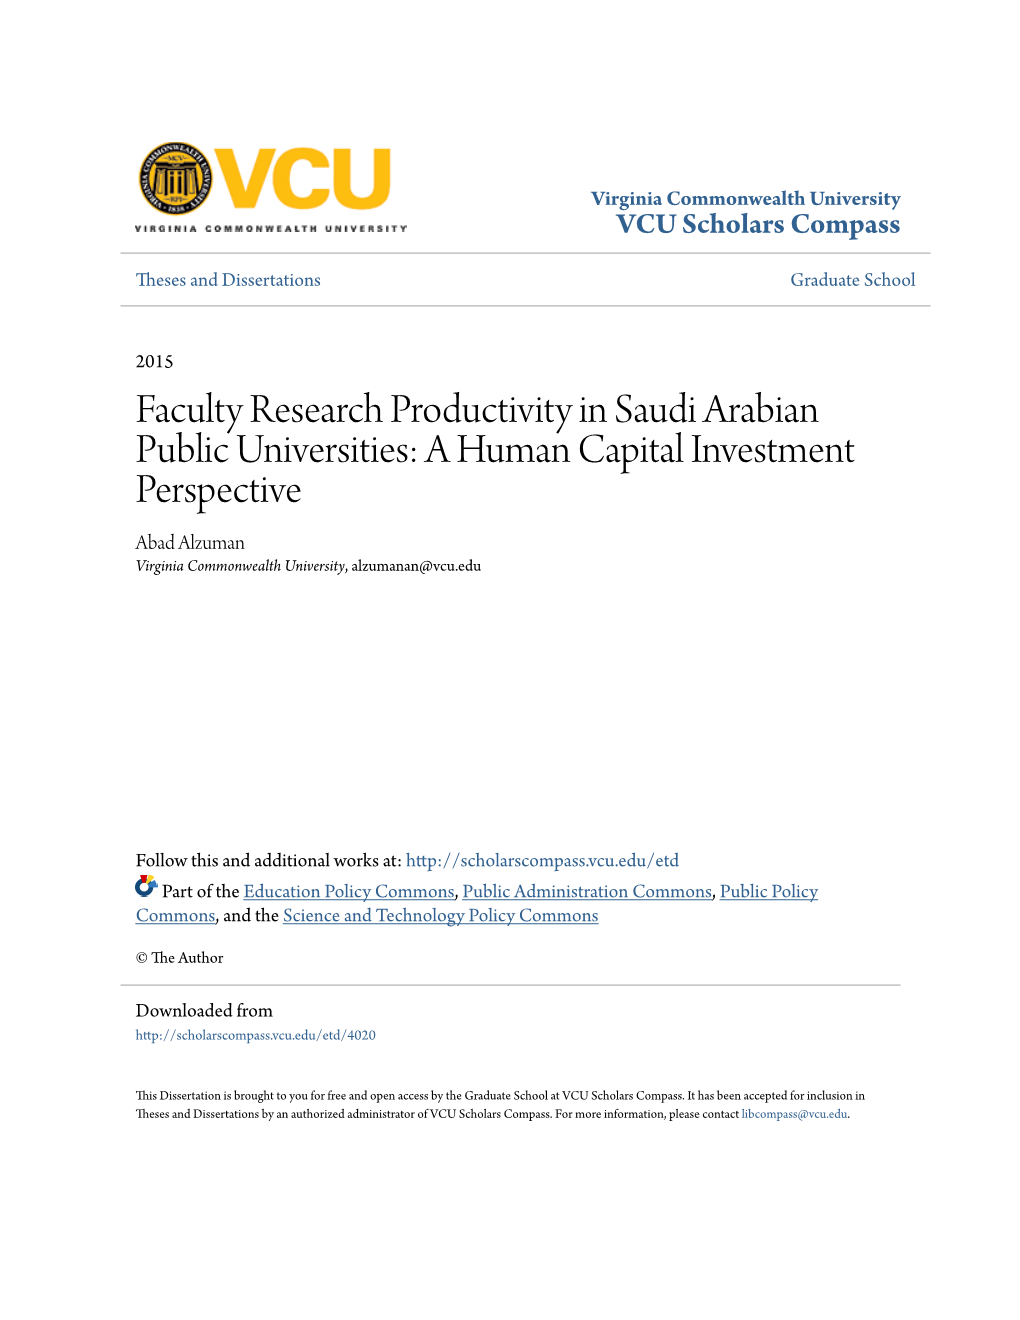 Faculty Research Productivity in Saudi Arabian Public Universities